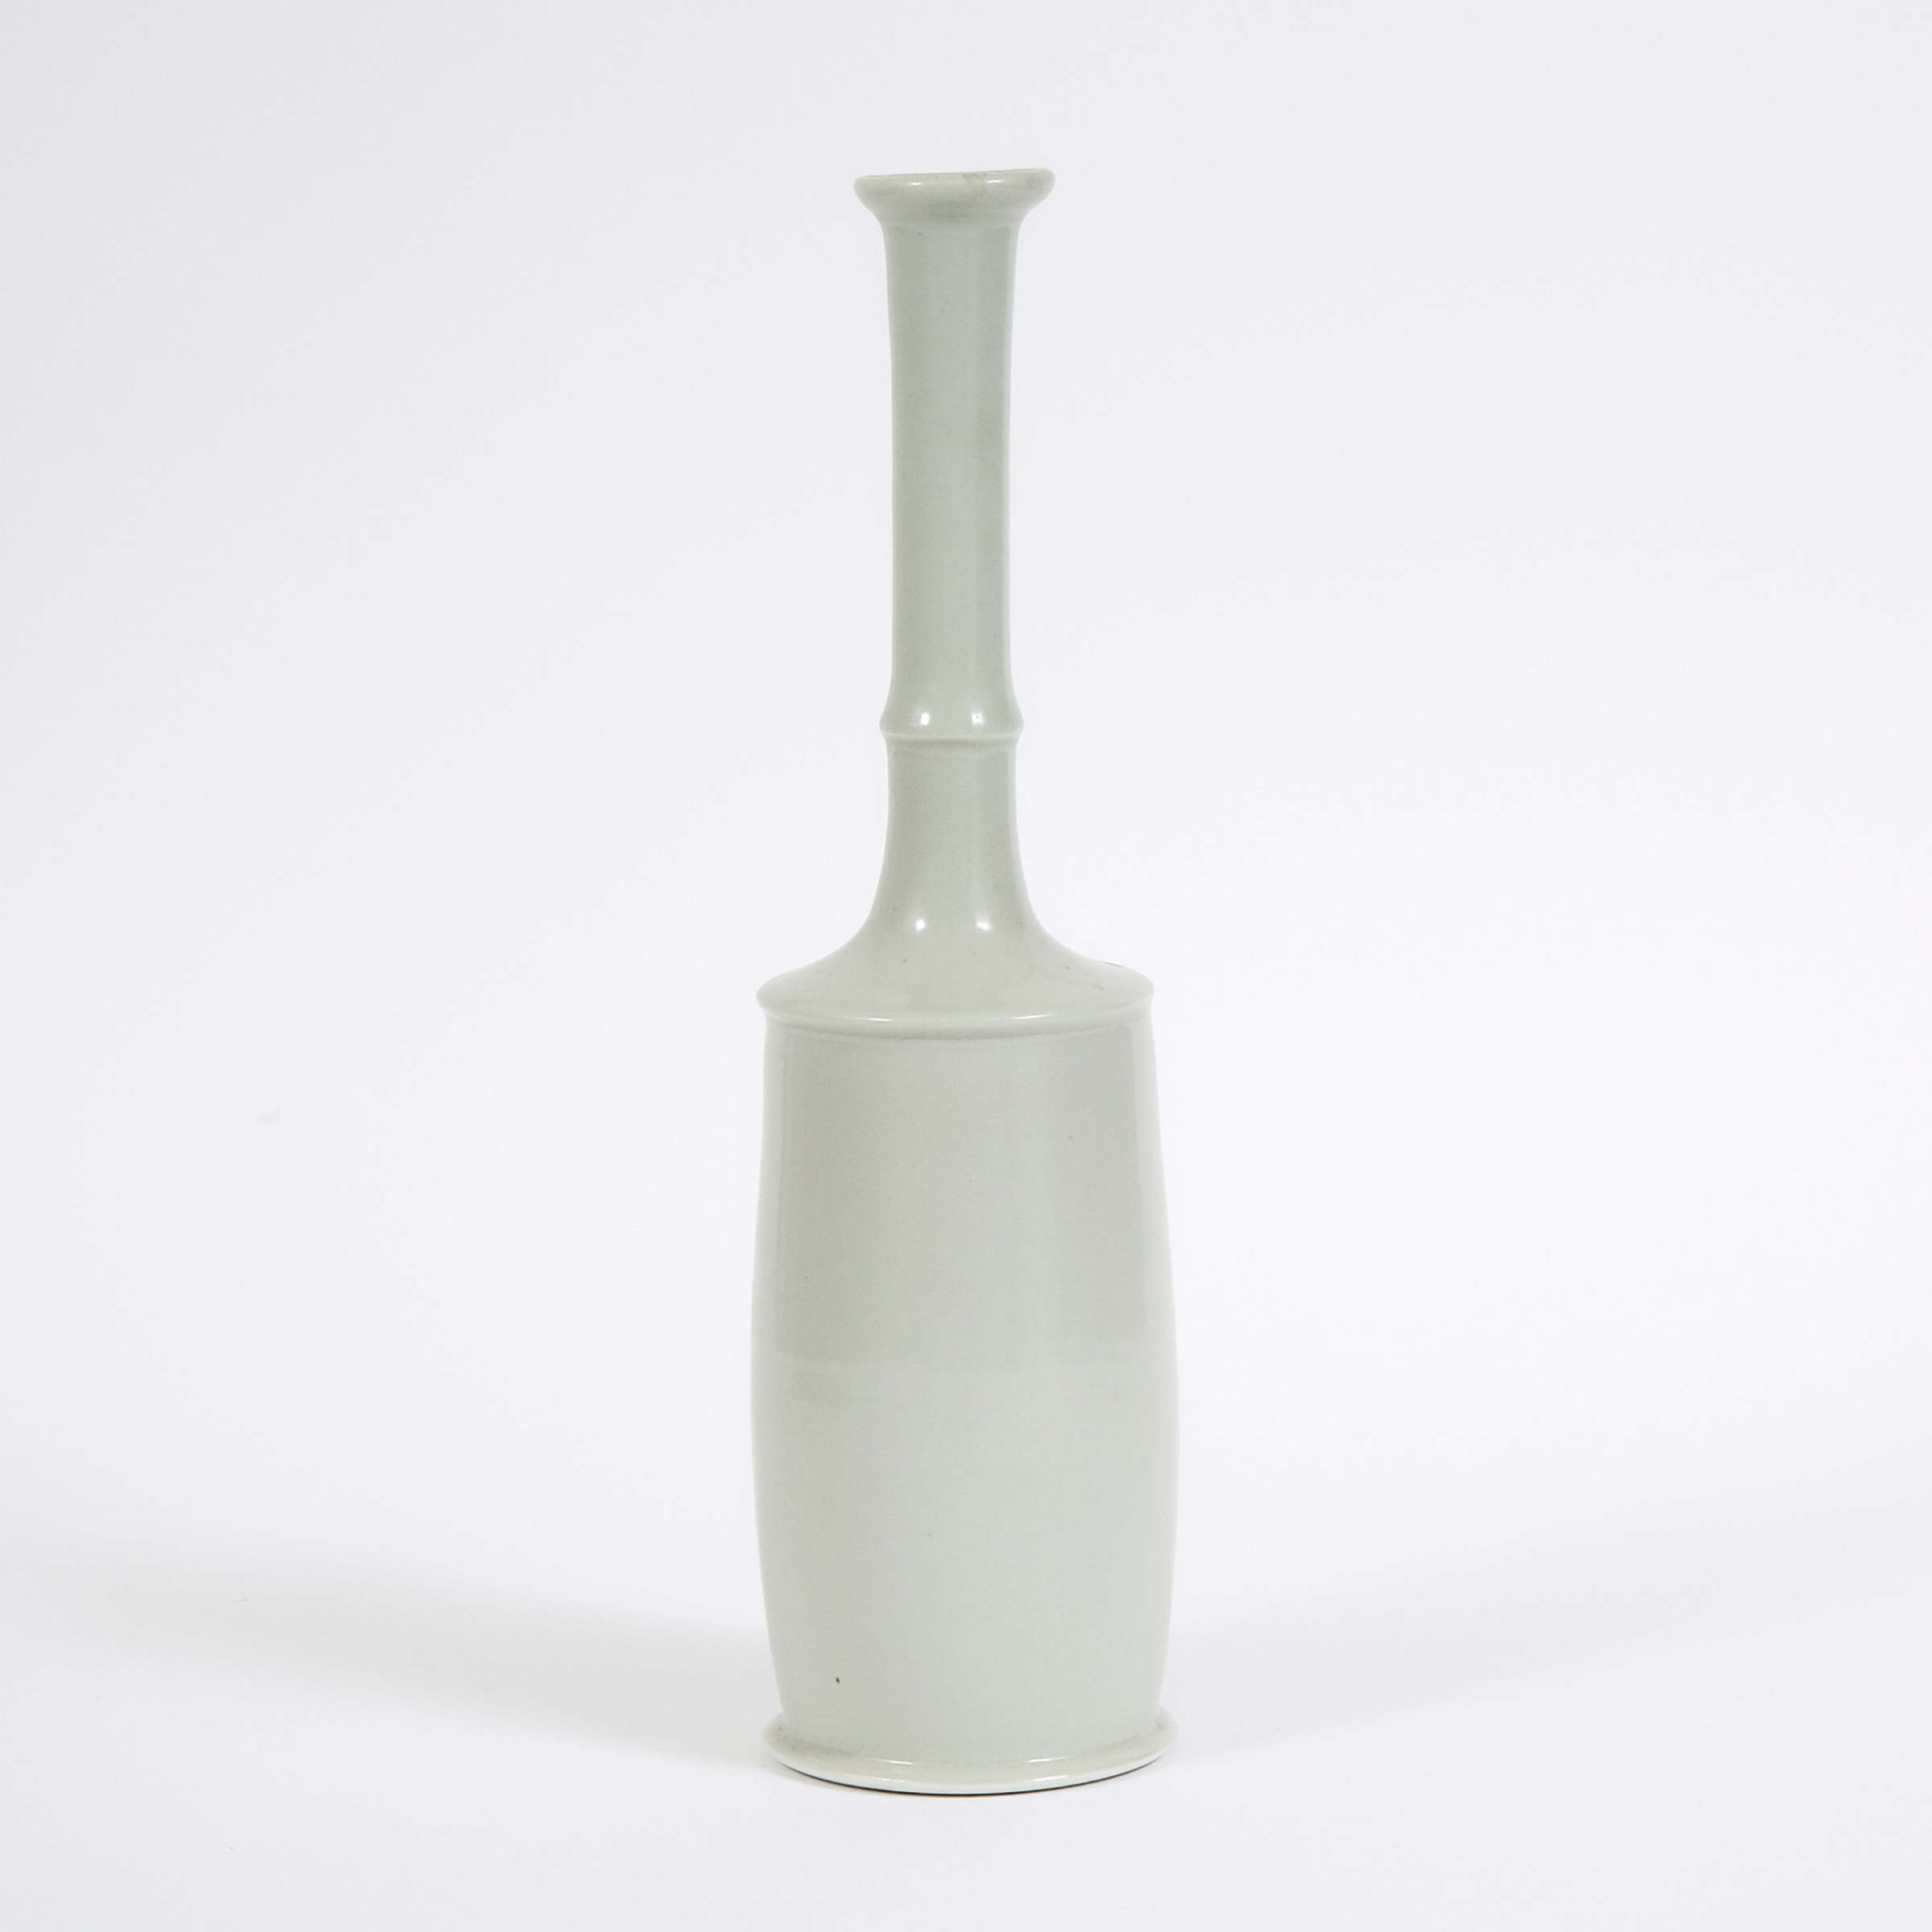 Harlan House (Canadian, b.1943), Crackle Glazed Vase, 1993